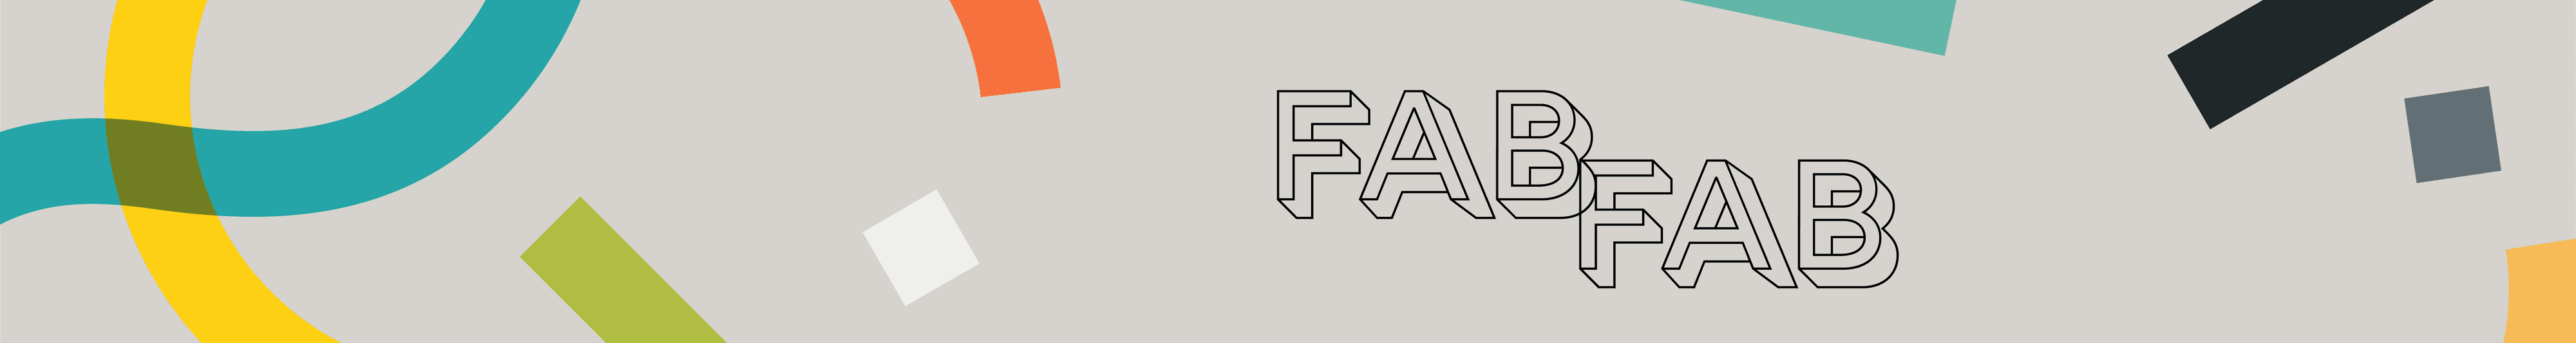 fabfab banner